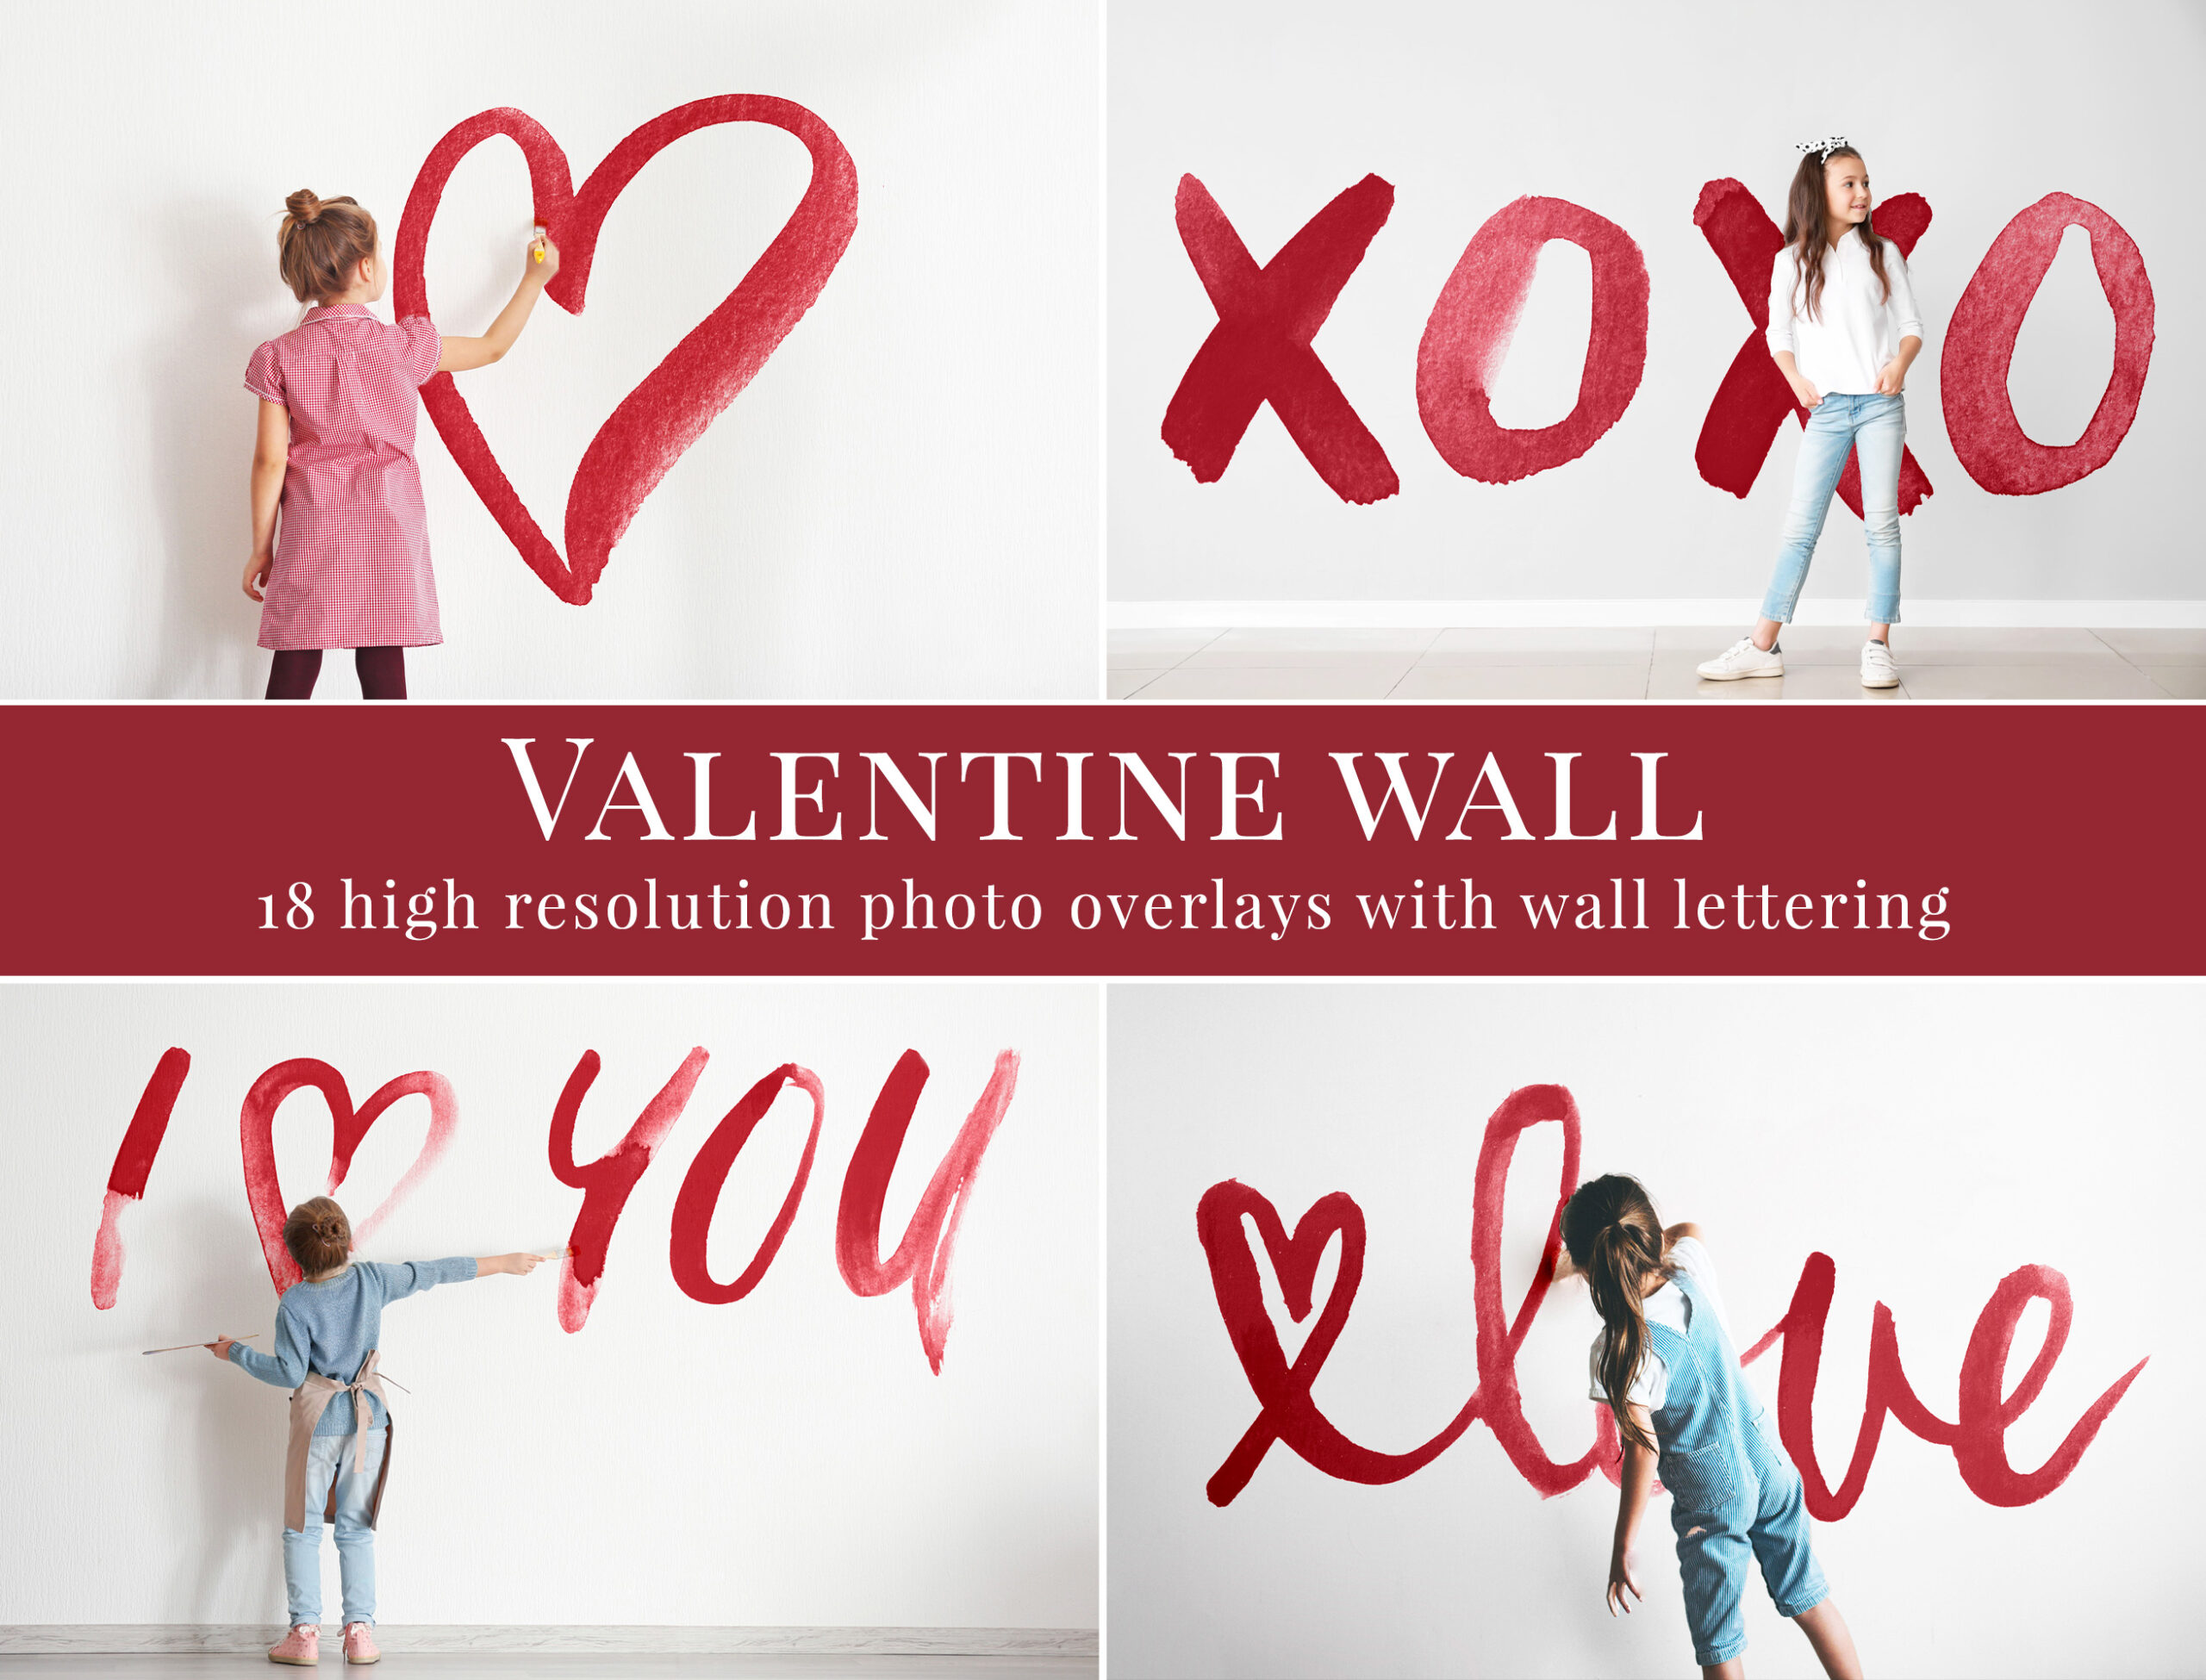 Valentine Wall photo overlays